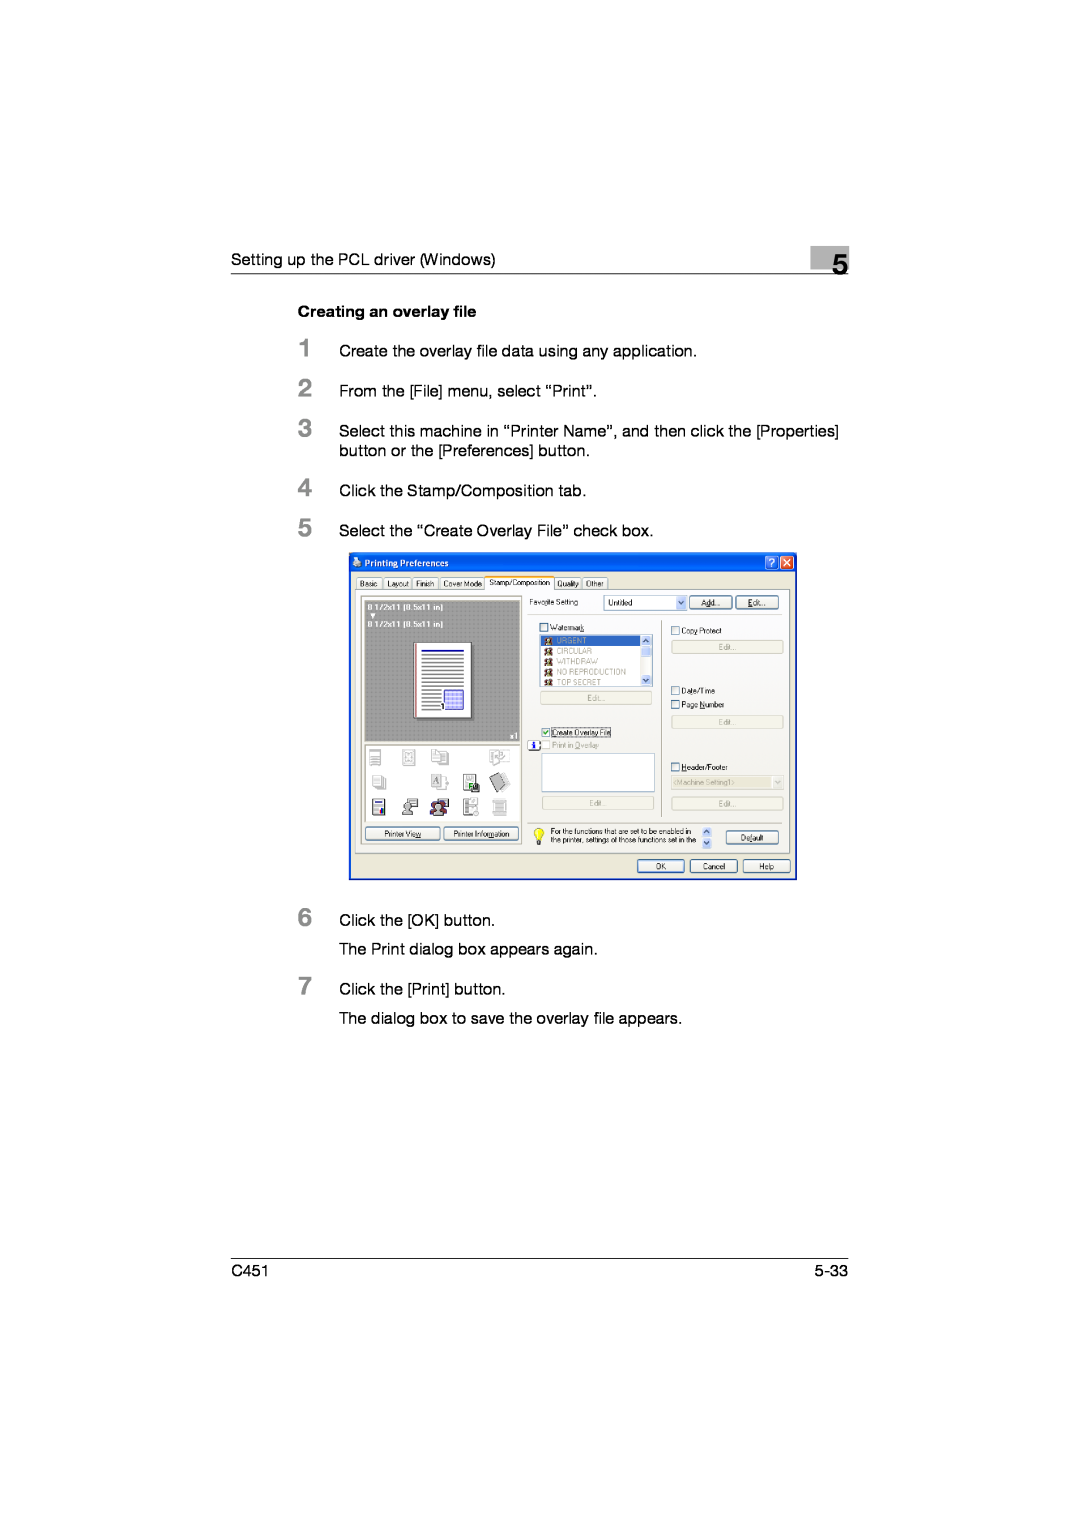 Konica Minolta C451 manual 1 2 3 4 5, Creating an overlay file 